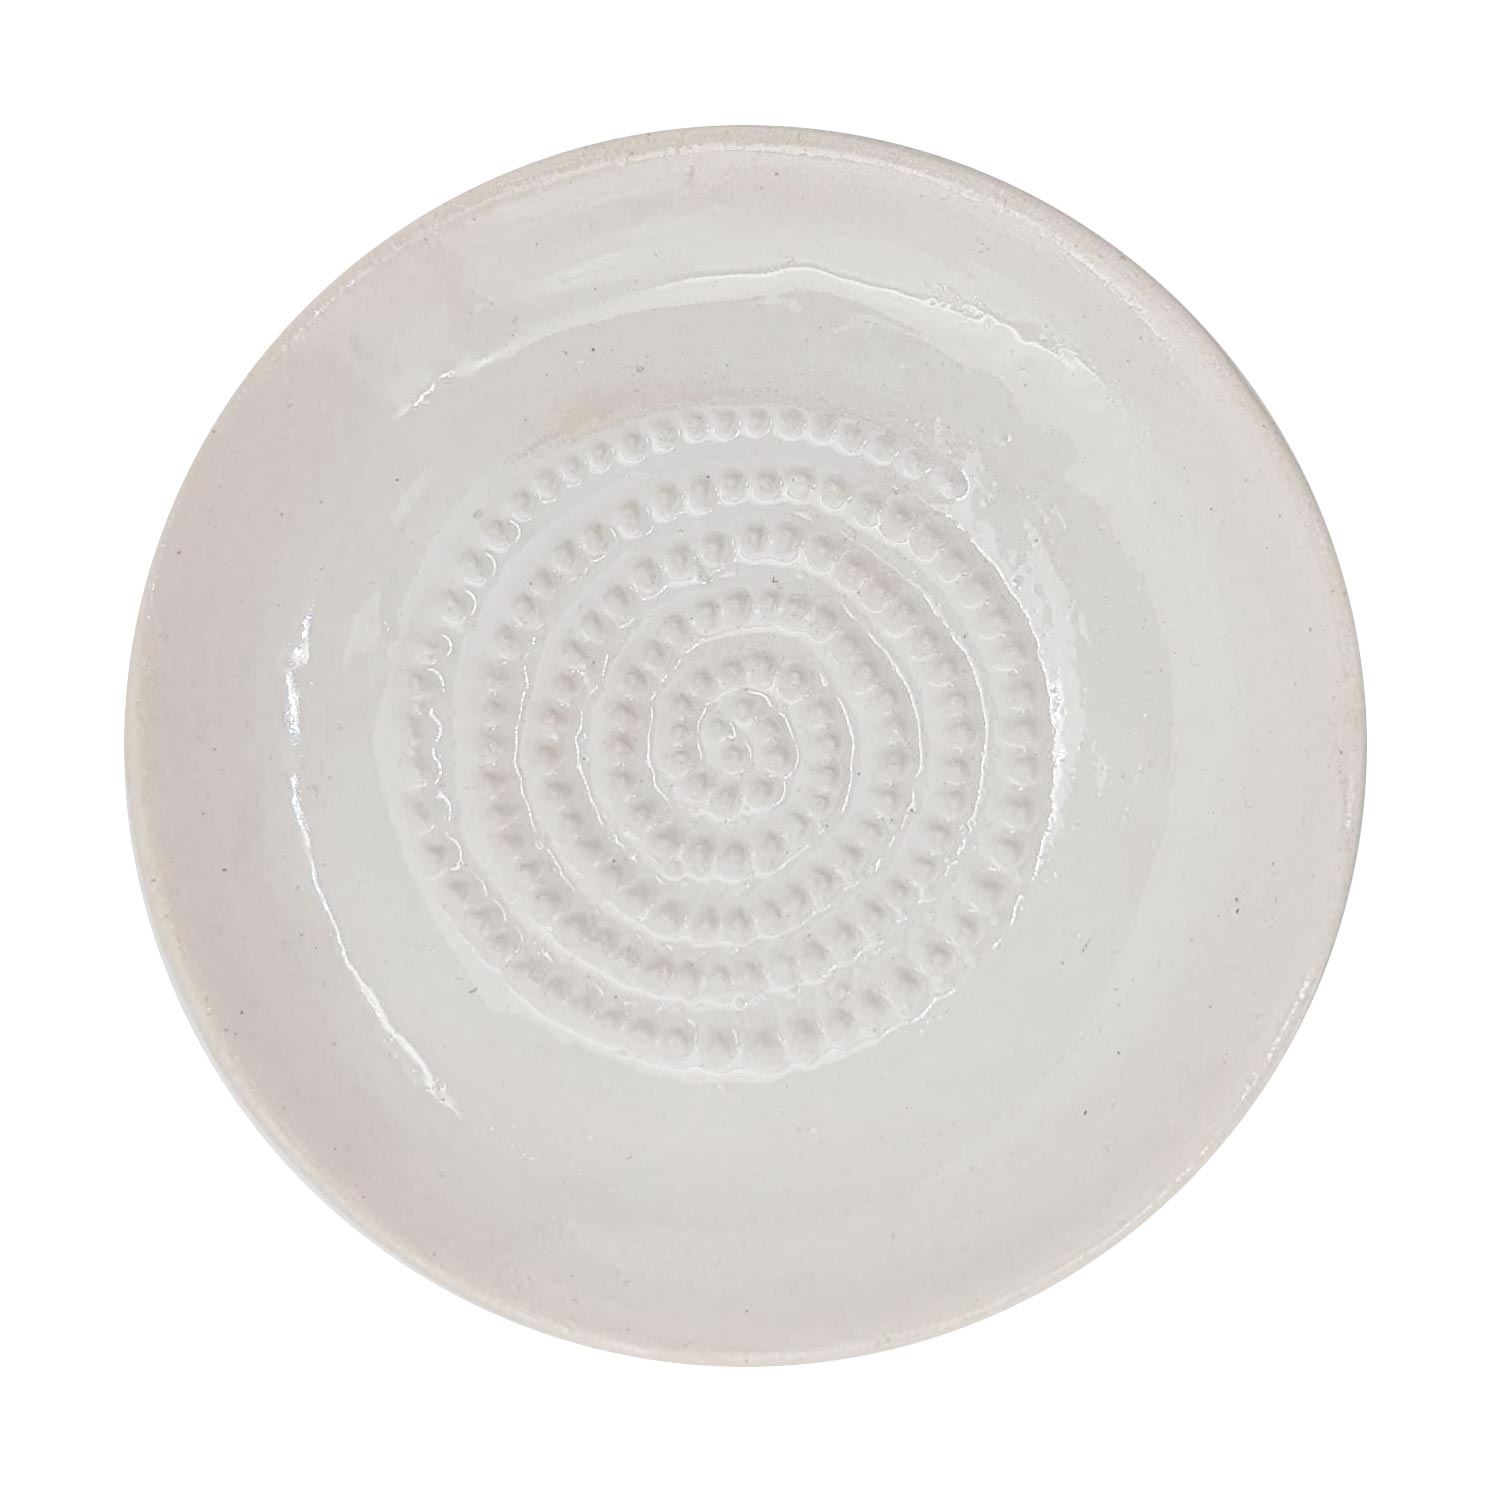 Ceramic Grater Plate - Africa Design - Handmade